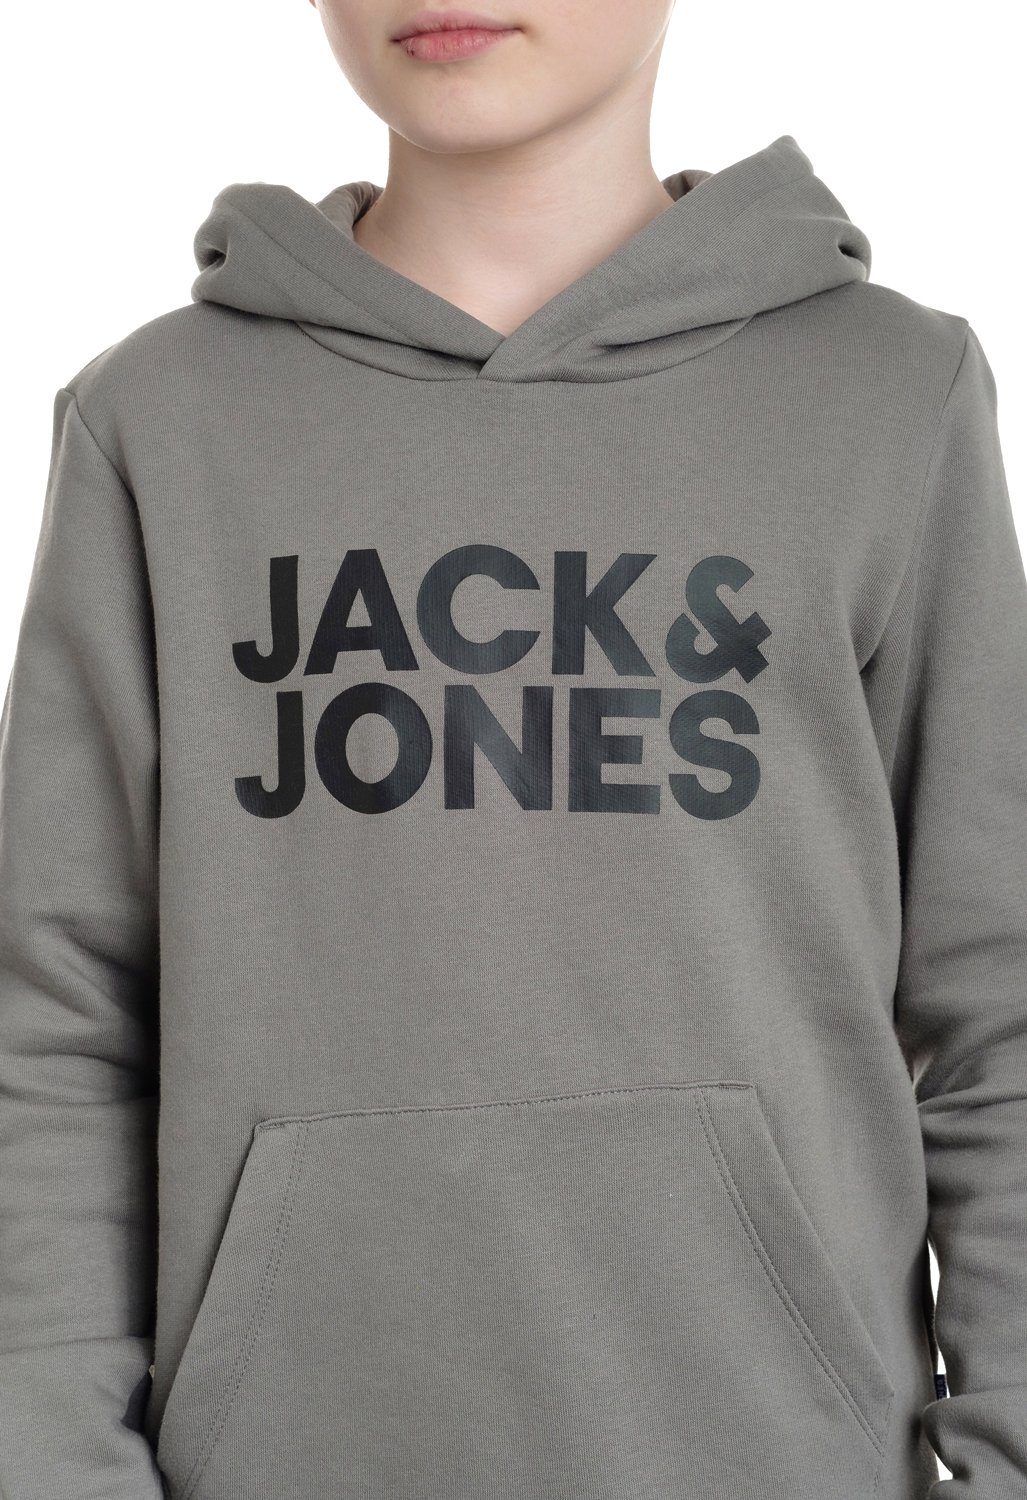 & Jones Jack Junior Sedona-Black Kapuzenpullover Unifarbe